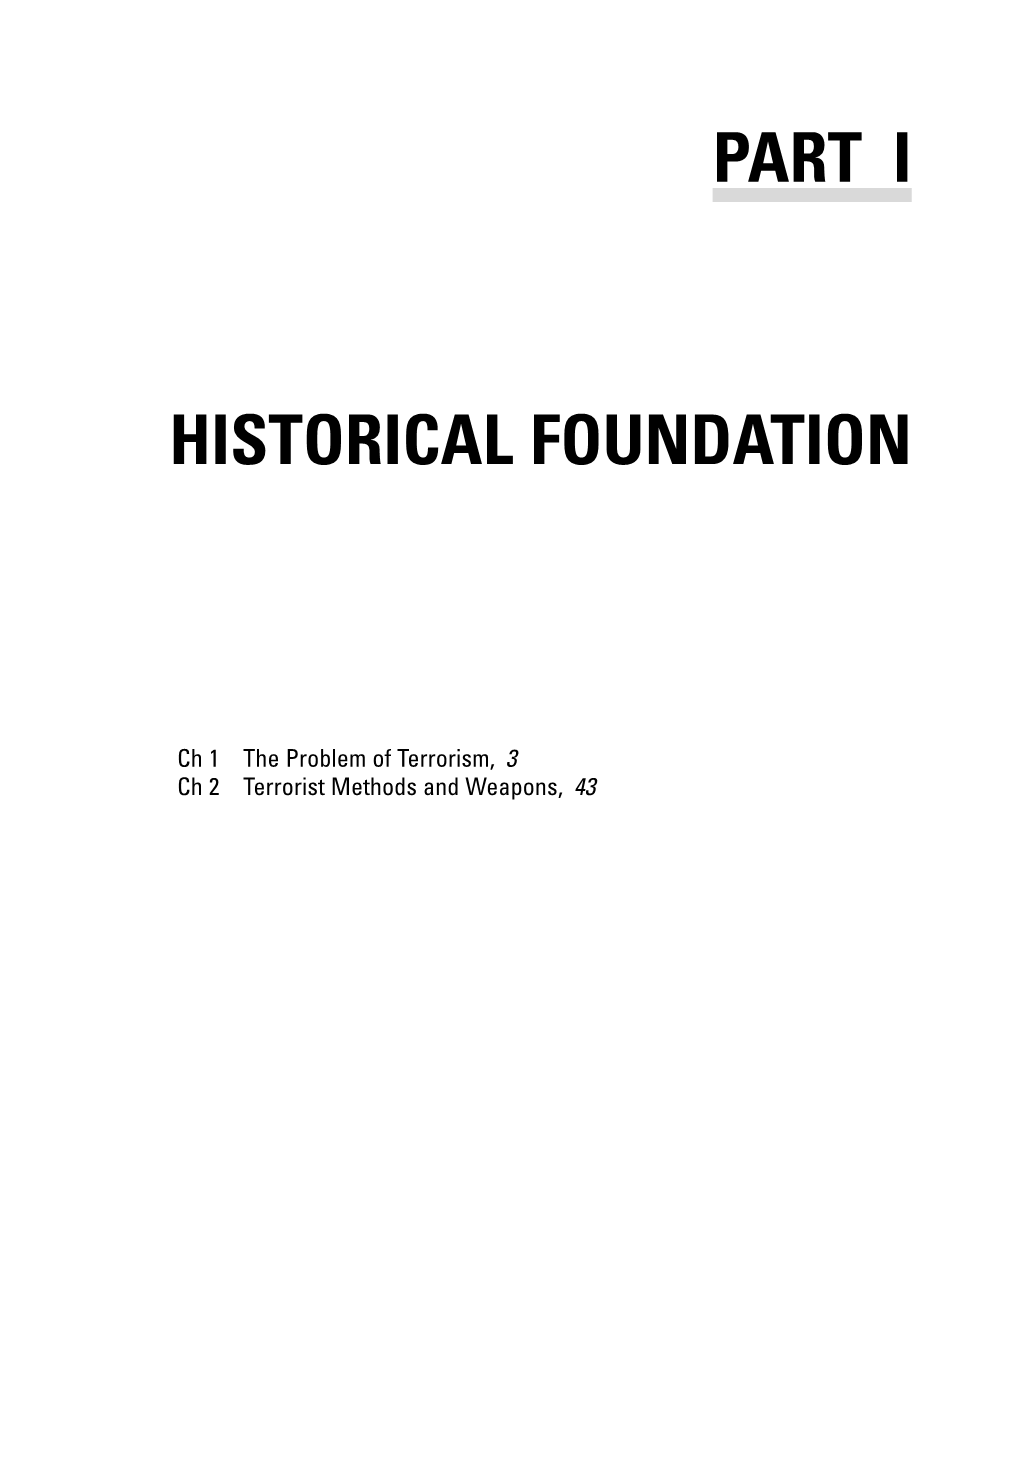 Part I Historical Foundation